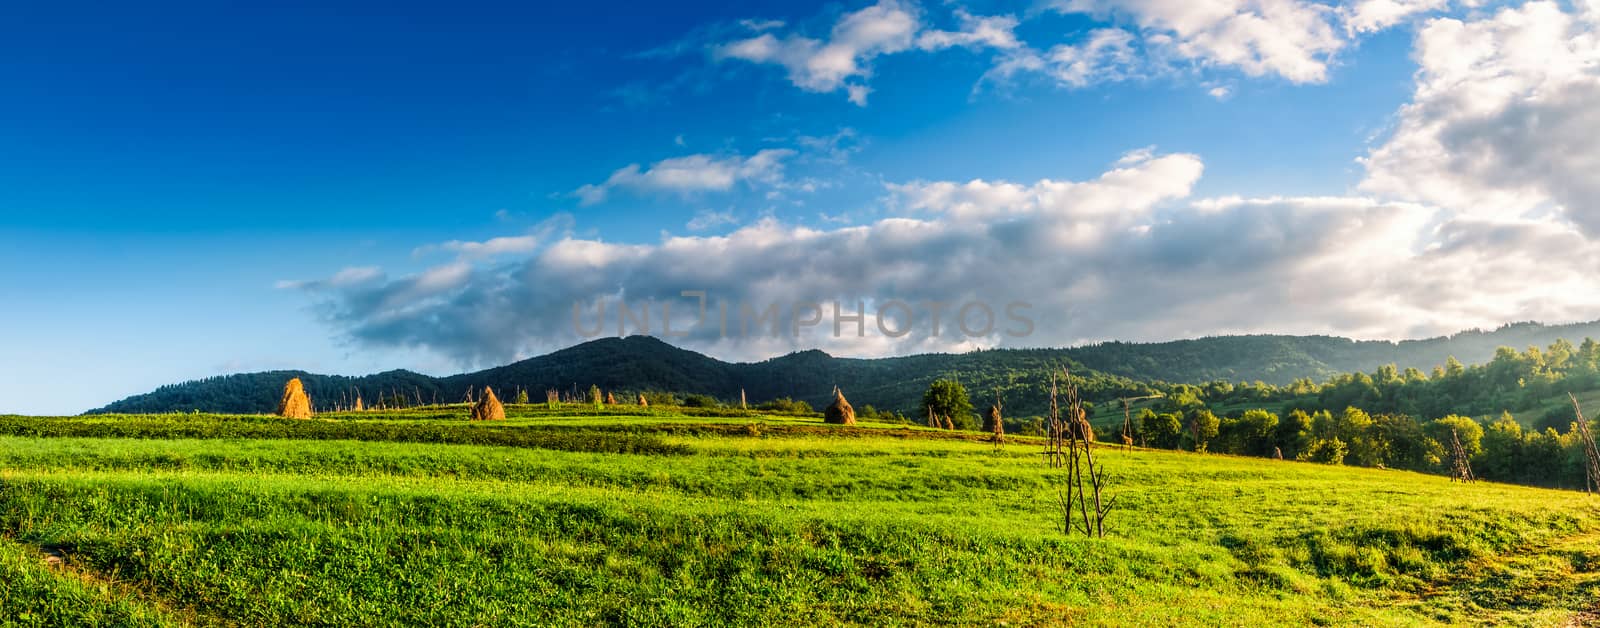 haystacks in a field near the forest in mountain by Pellinni